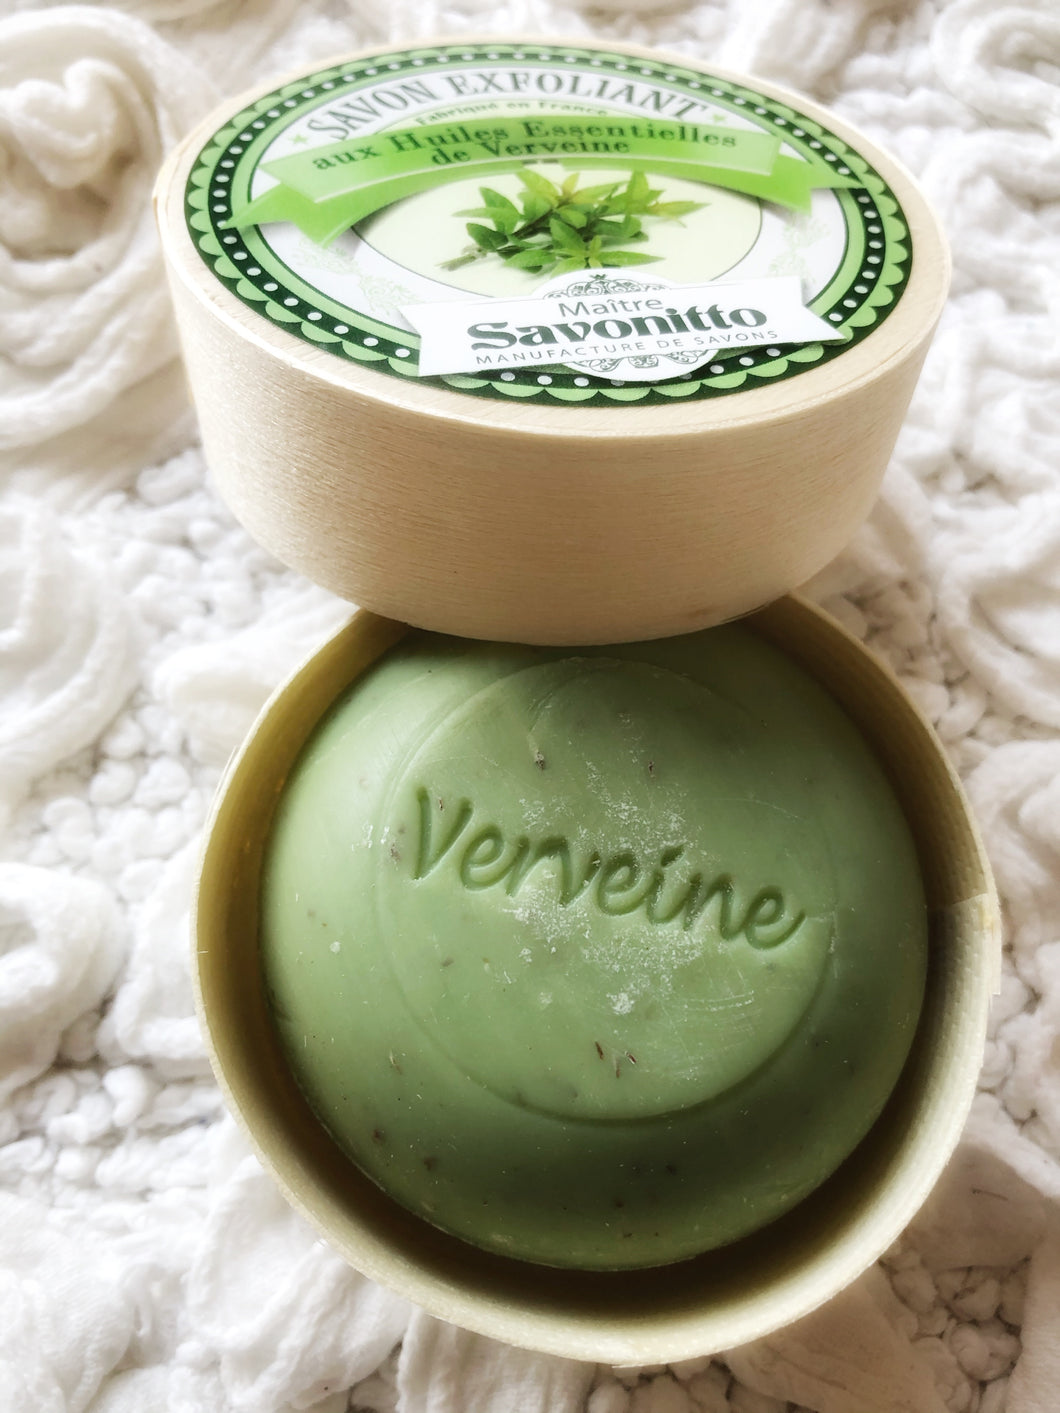 Pyöreä verbena-palasaippua, vihreä saippua jossa lukee Verveine, puurasia auki La Petite Provence